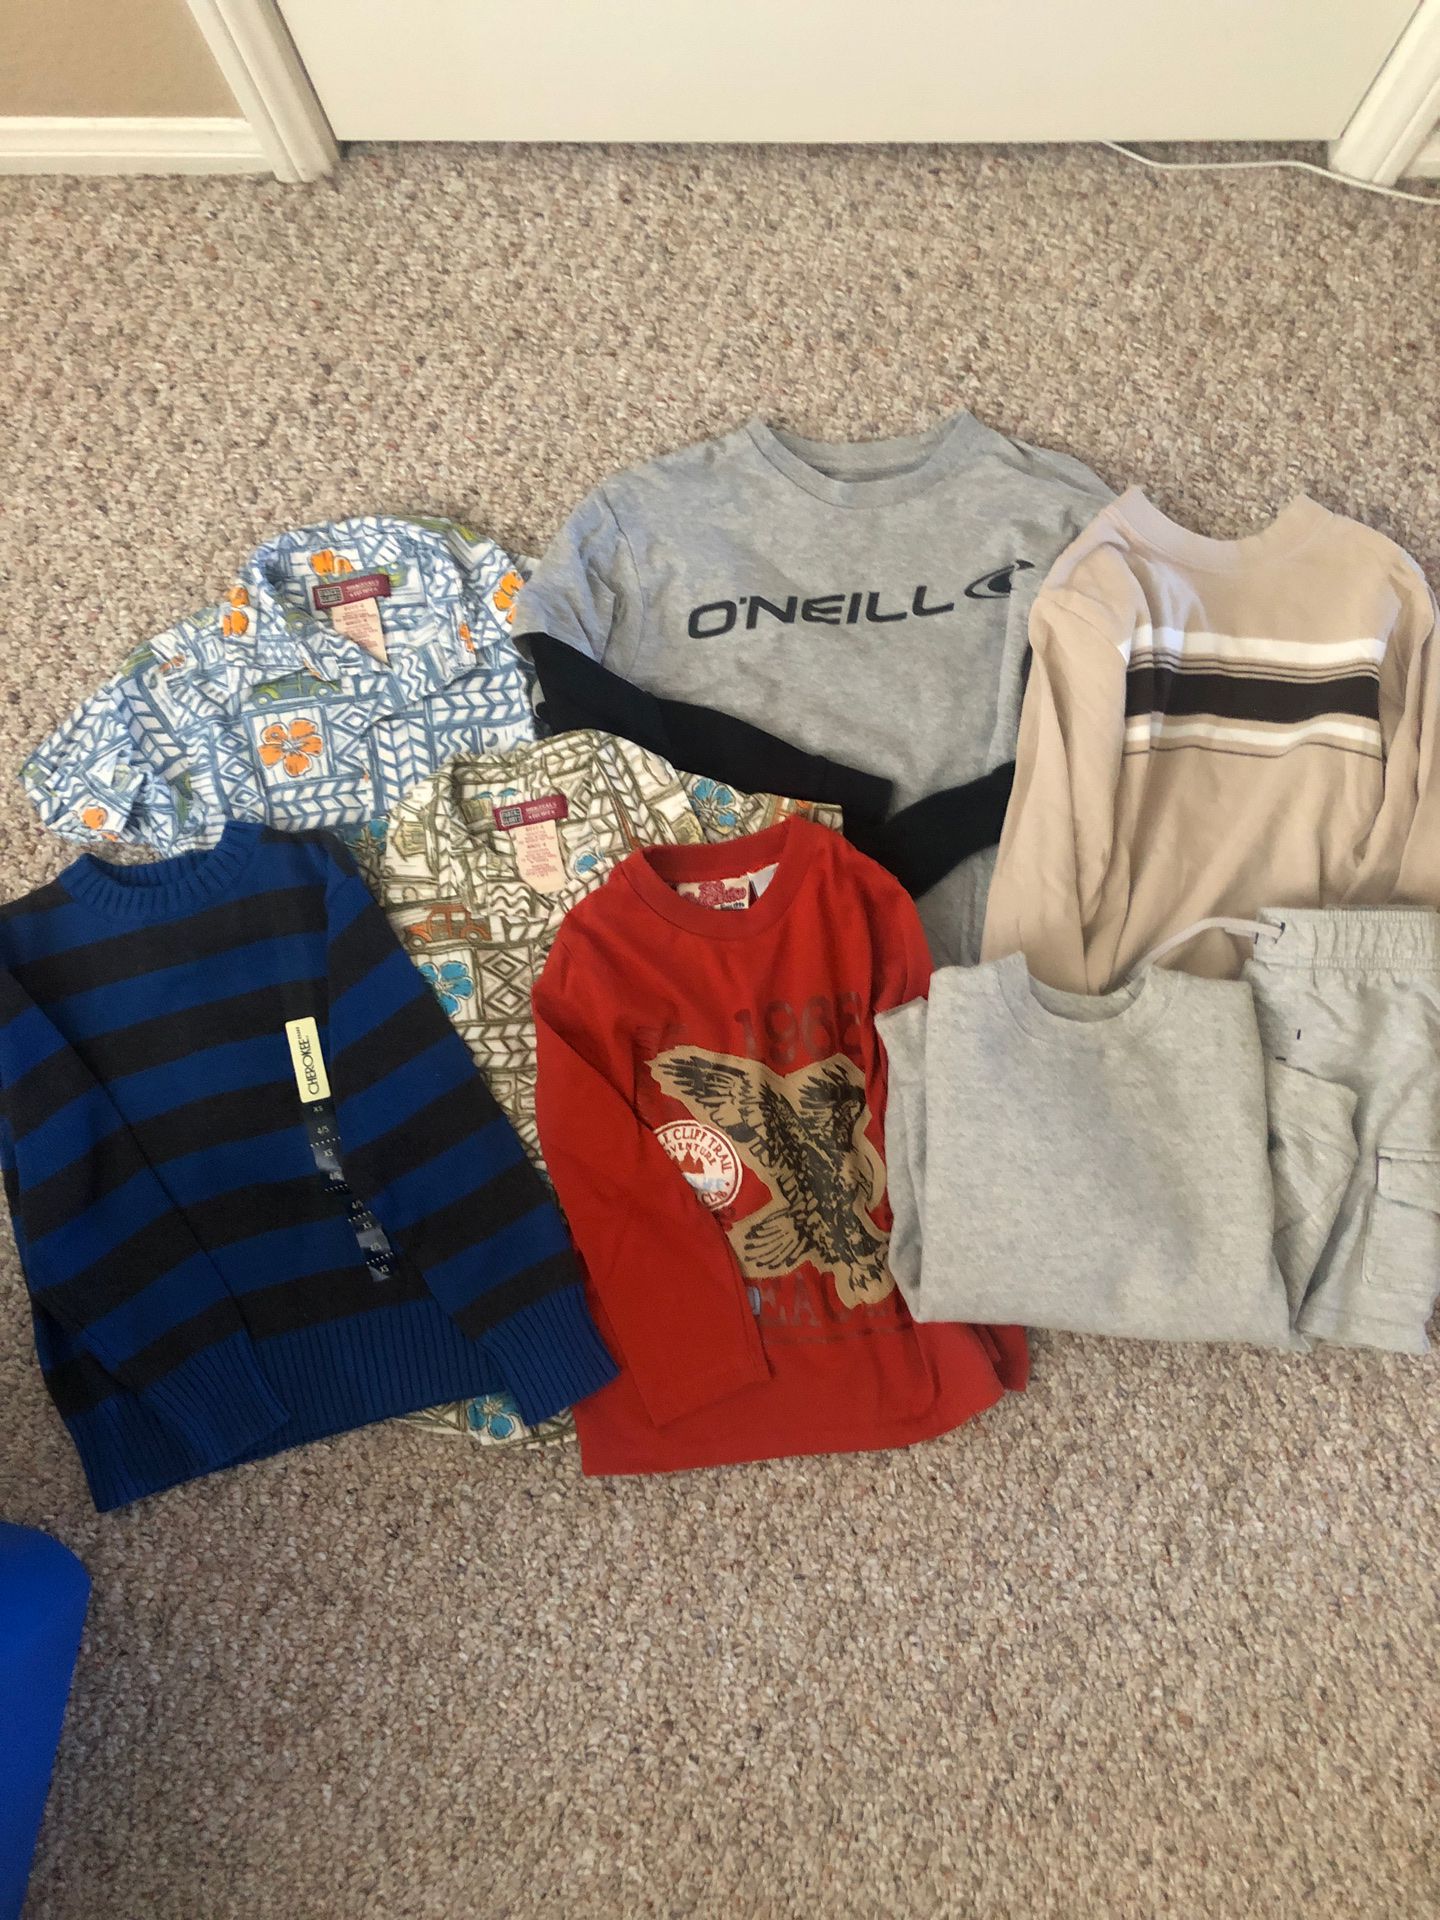 Boys clothes- Size 4